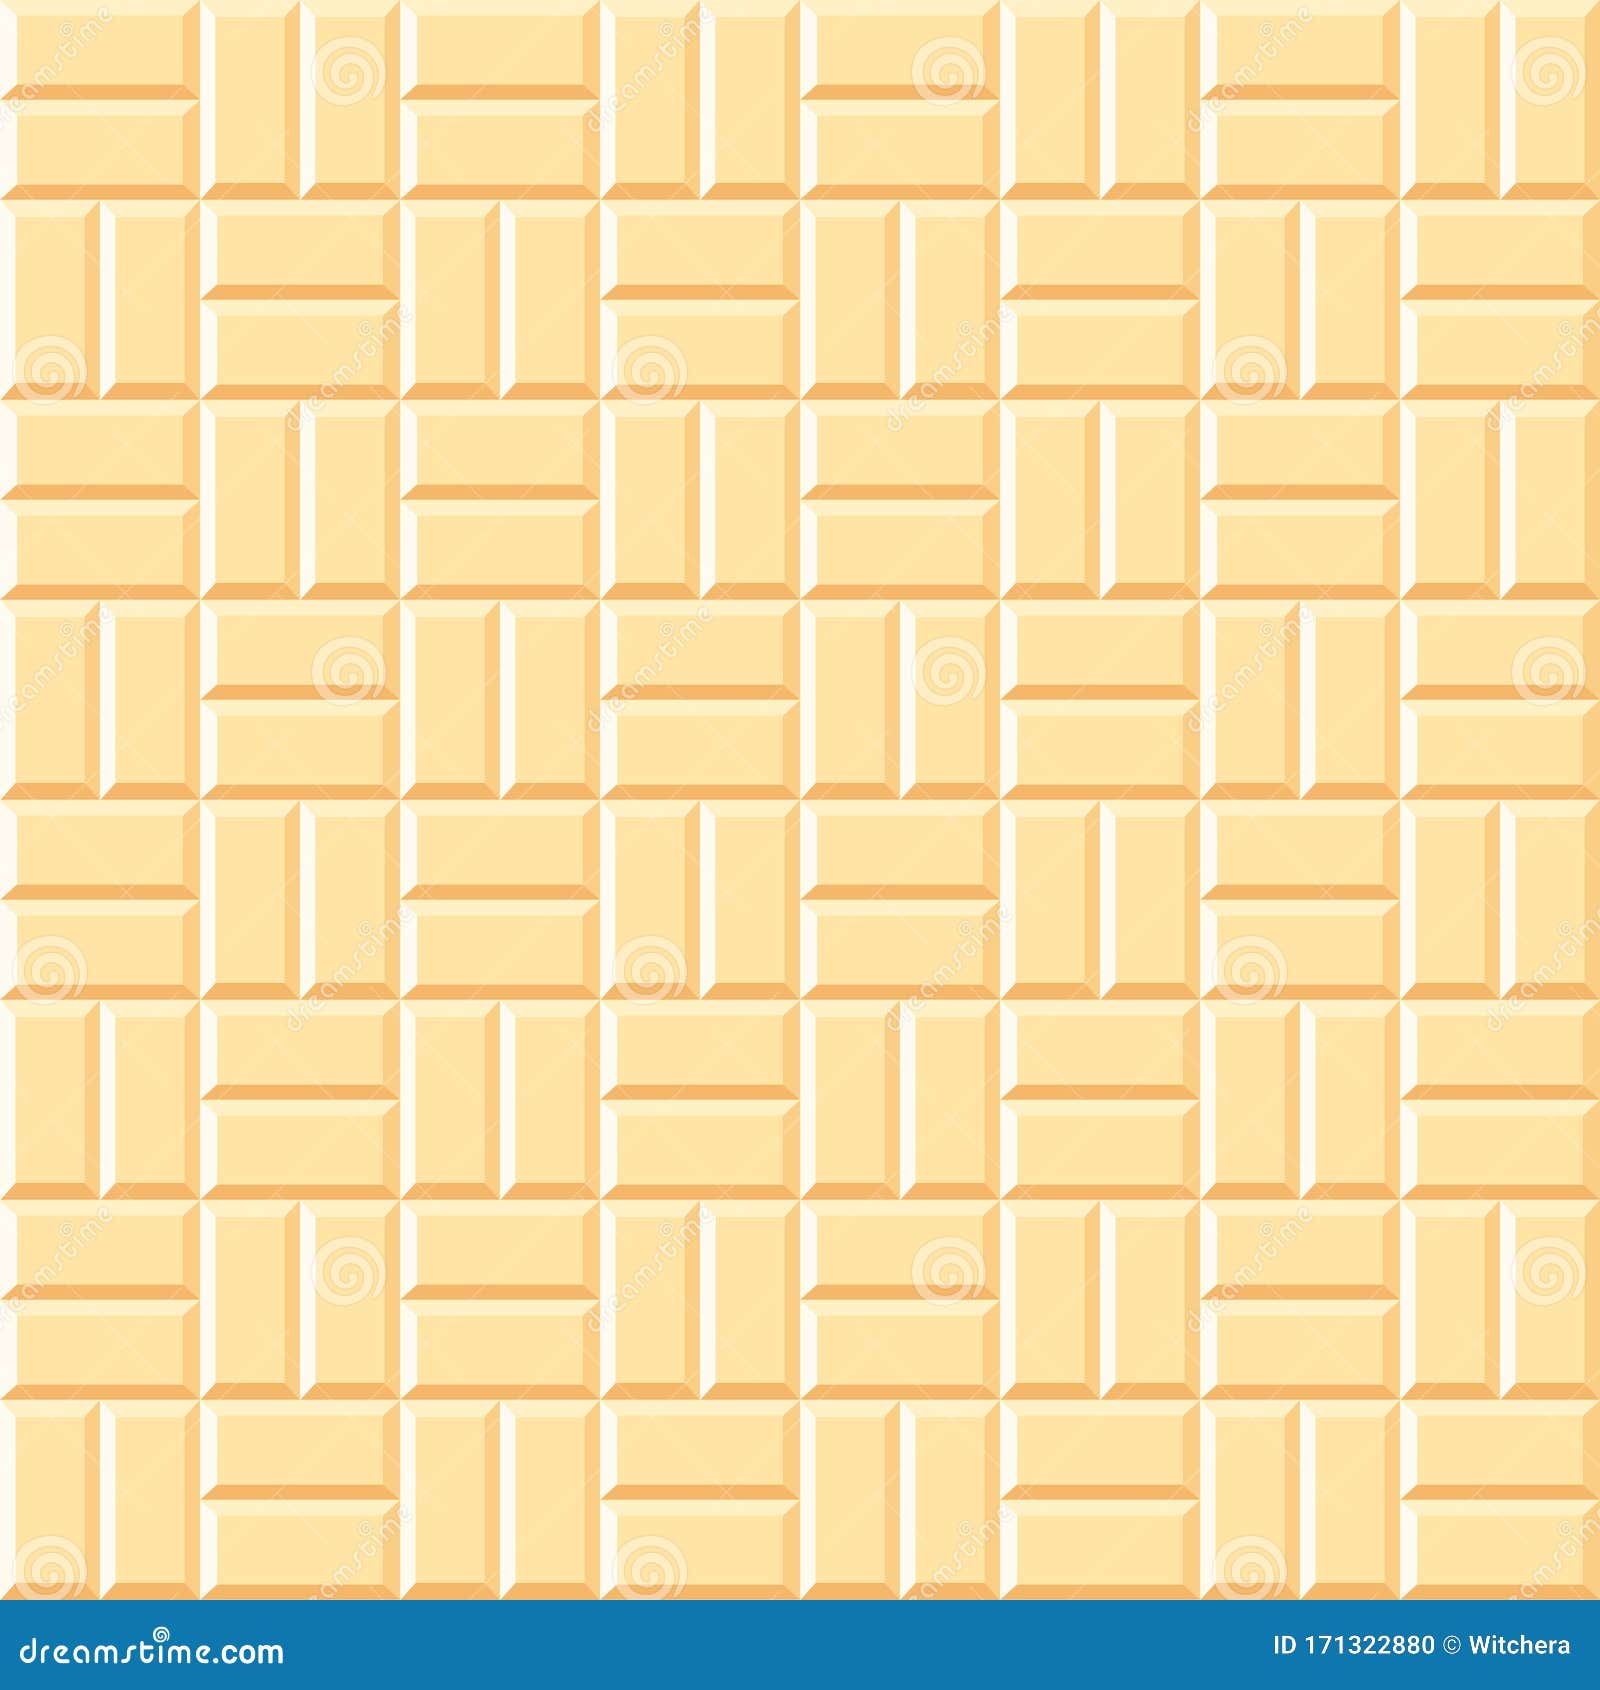 realistic seamless tile texture